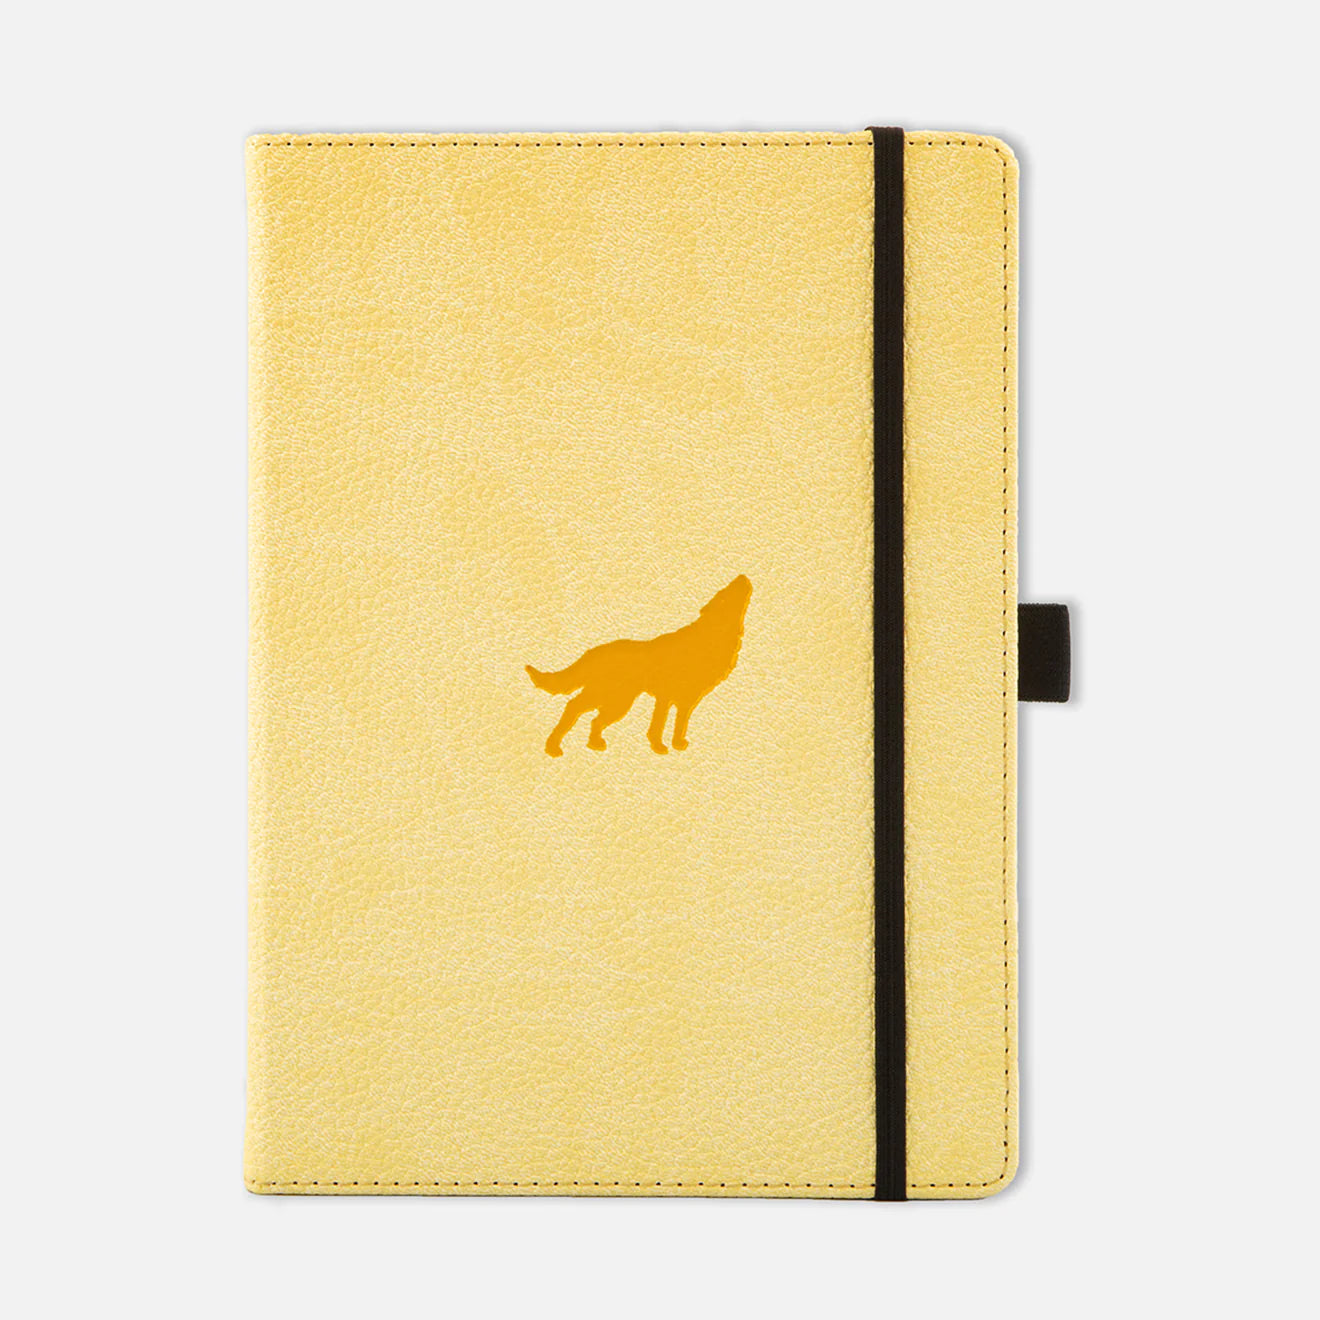 Dingbats* Wolf Notebook - Lined